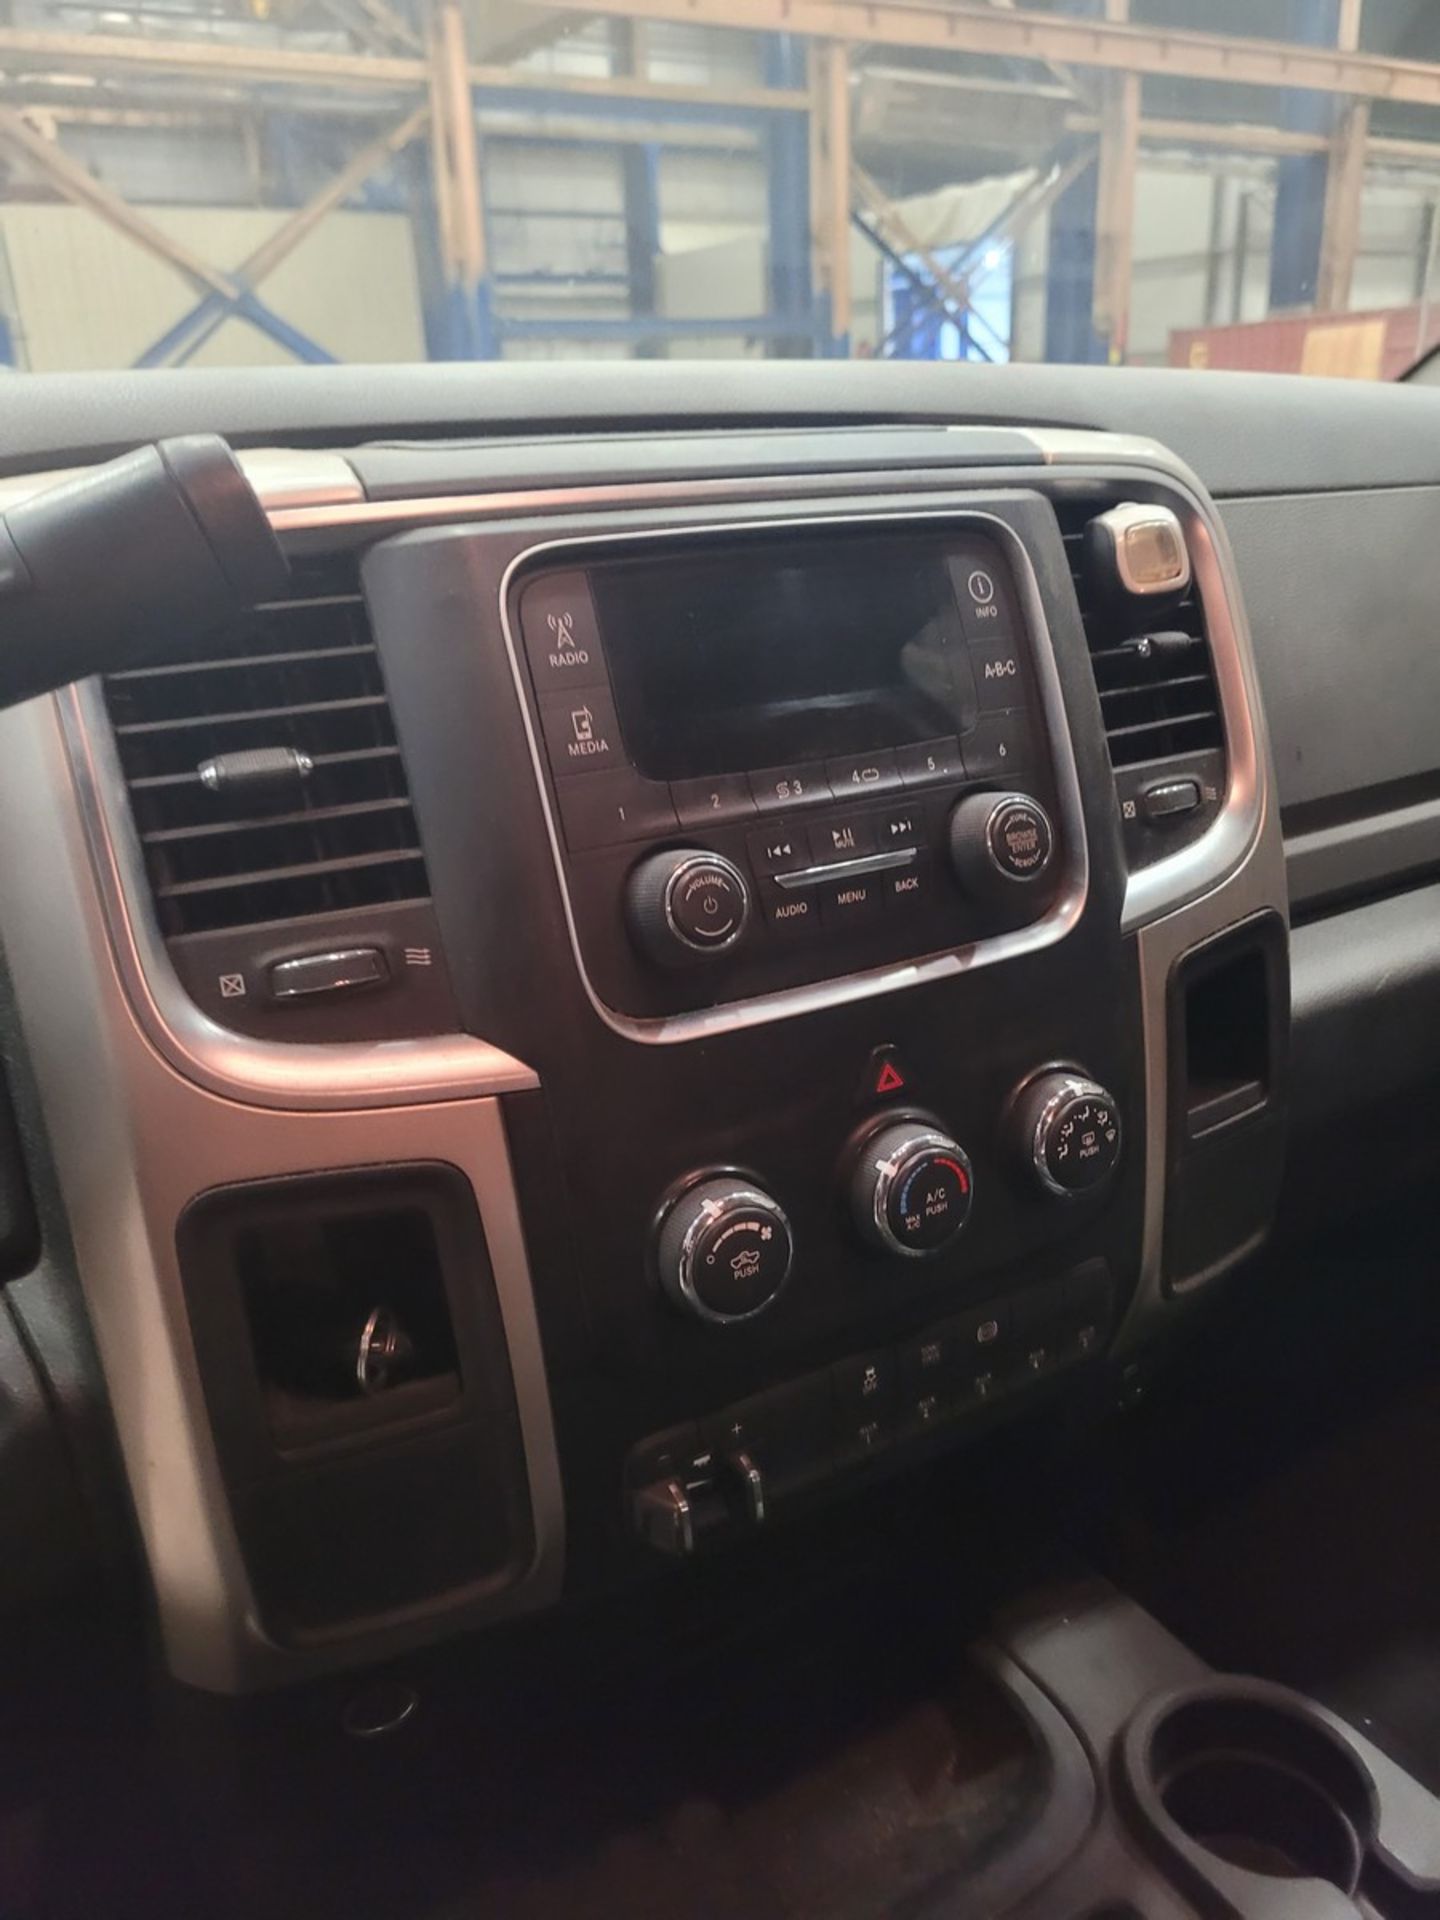 2016 Dodge Ram 3500 Flat Bed Pickup Truck - Image 9 of 13